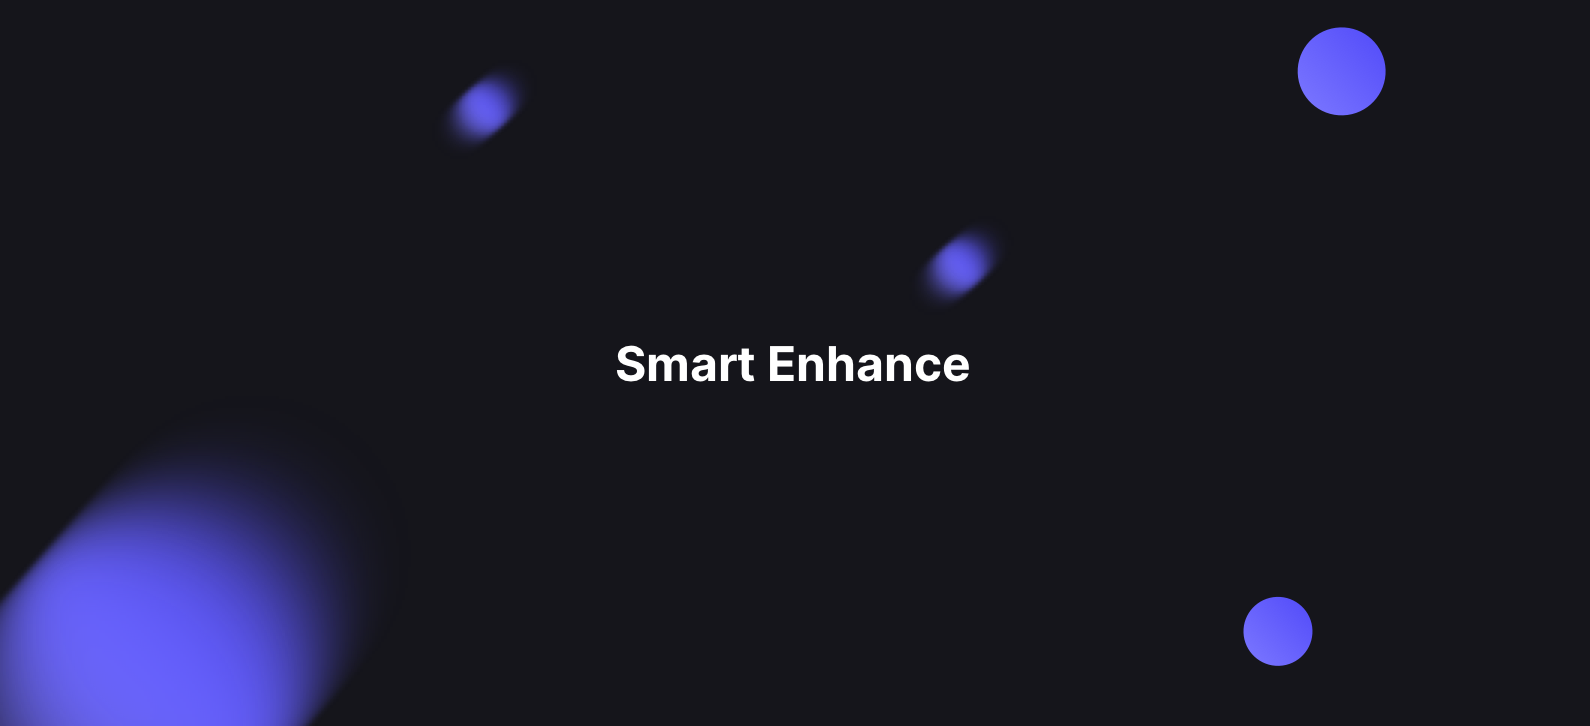 Introducing Smart Enhance